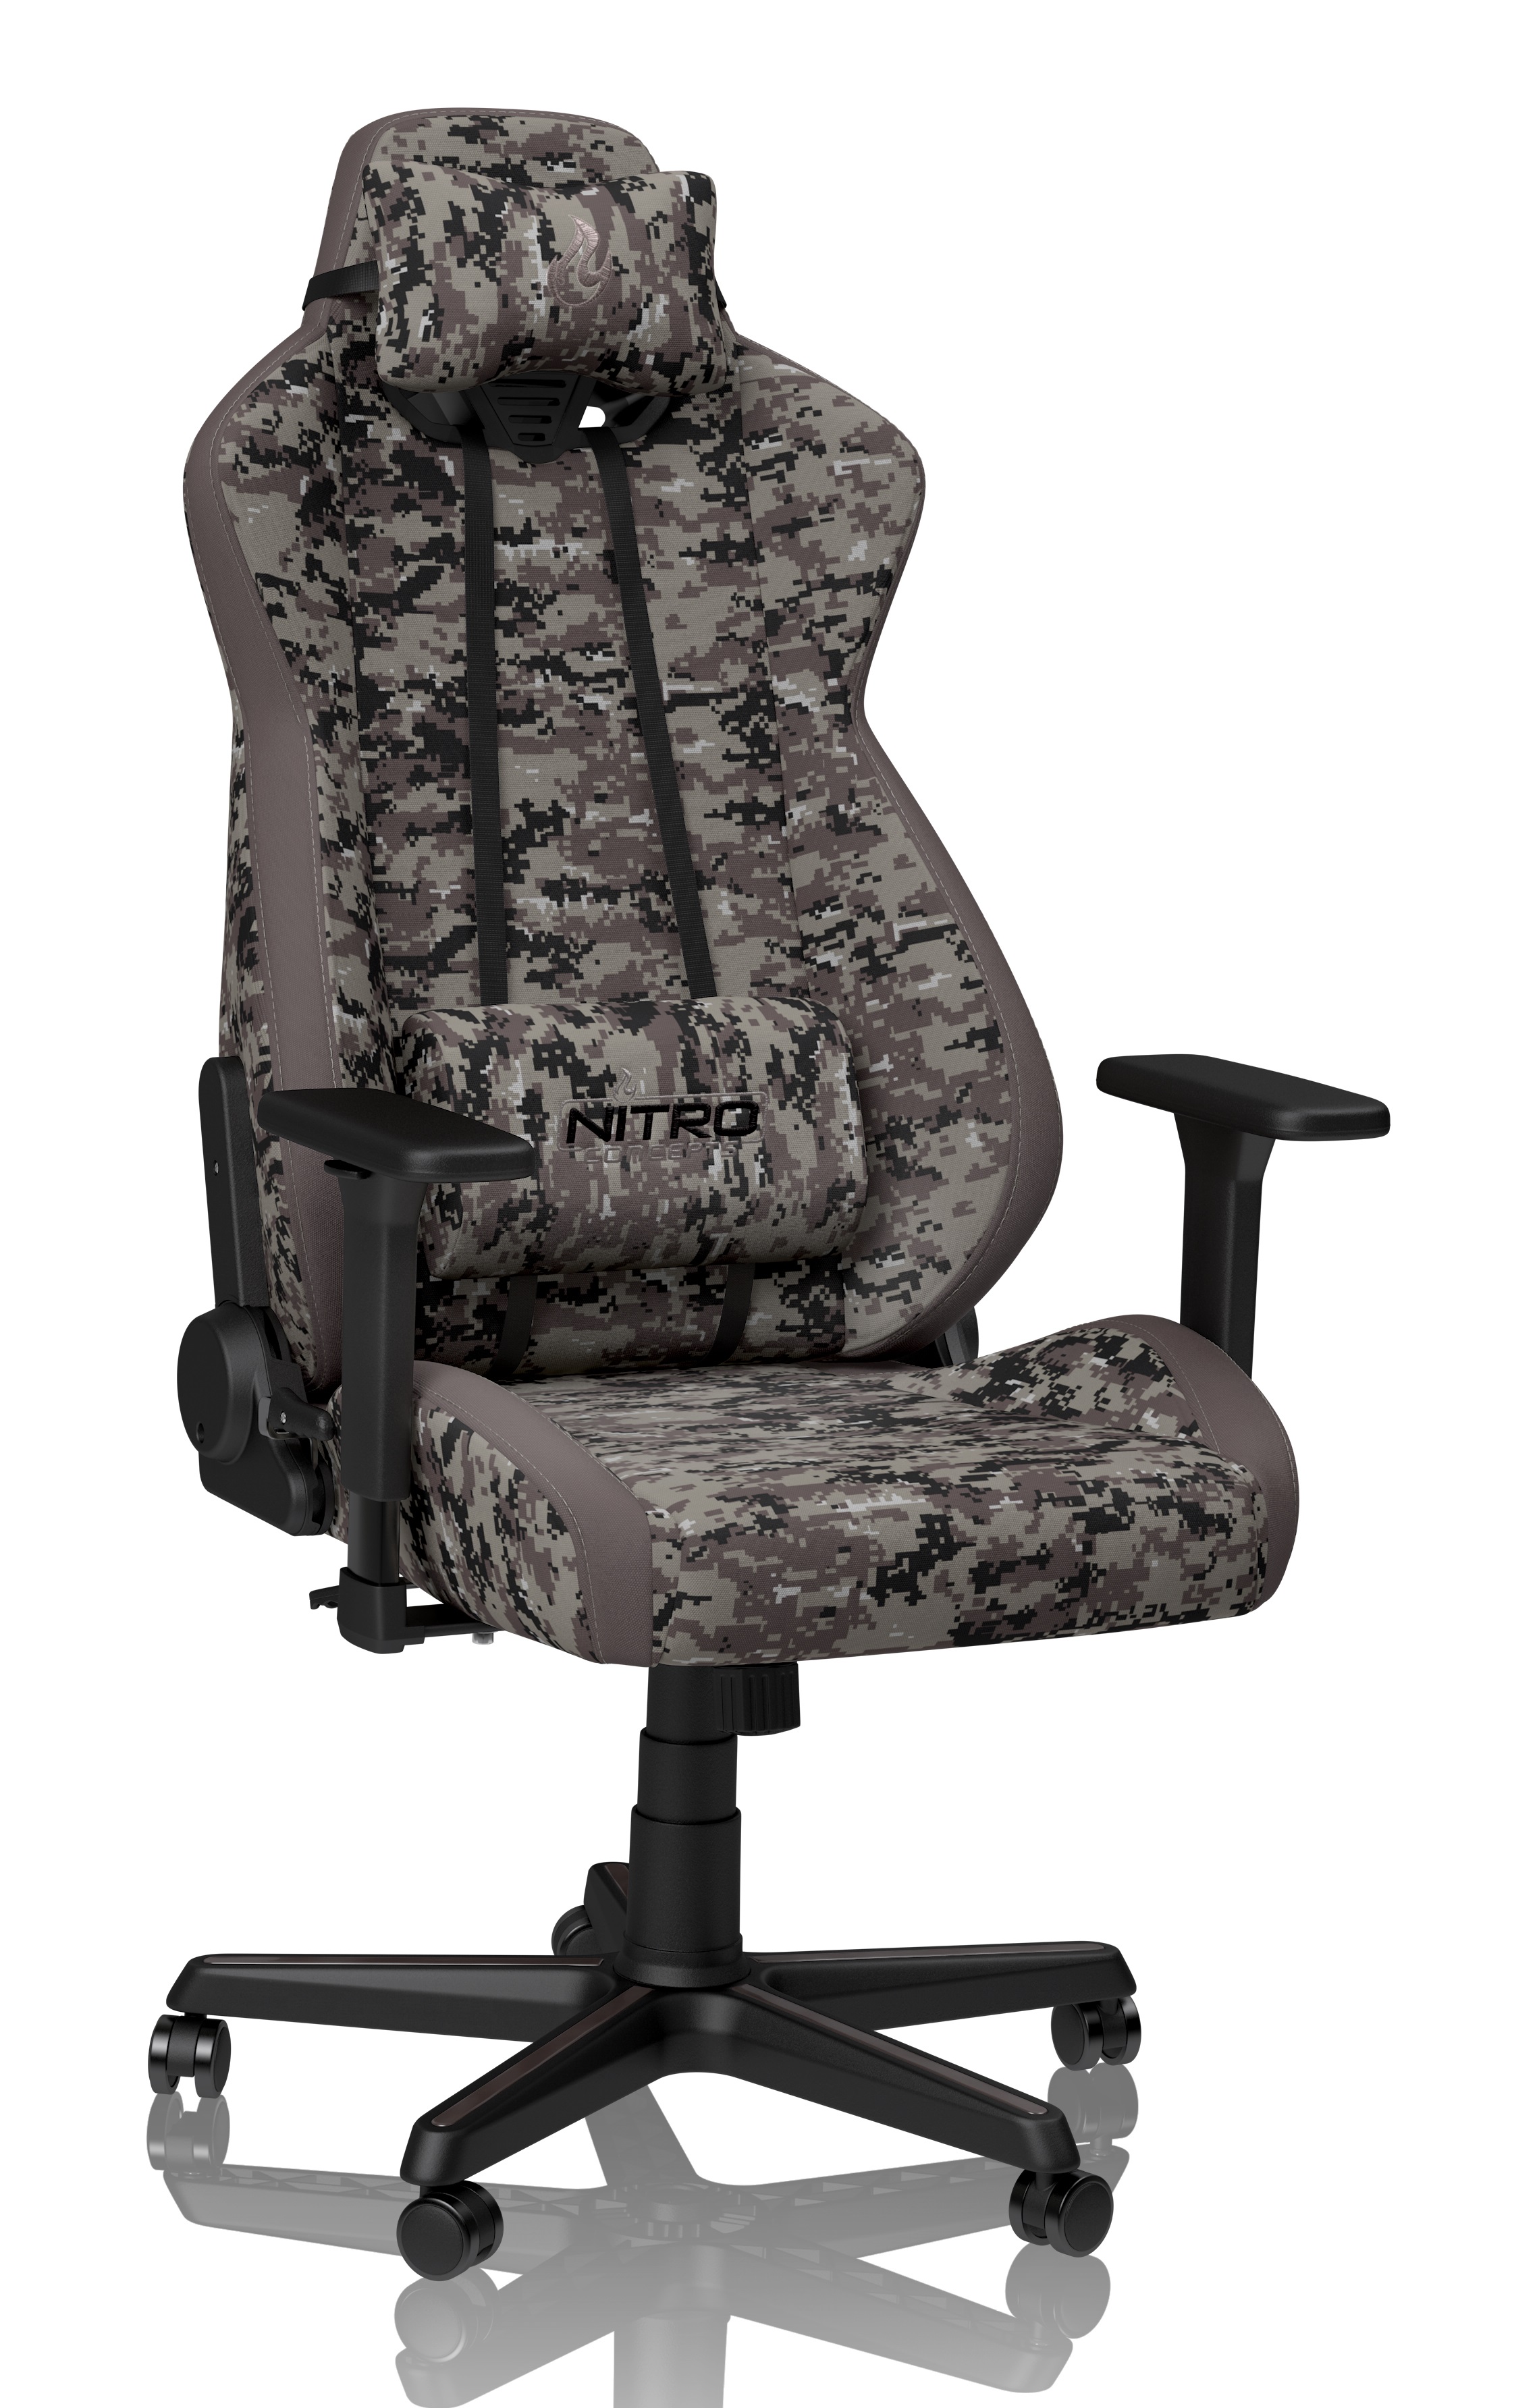 Nitro Concepts S300 Fabric Gaming Chair - Urban Camo